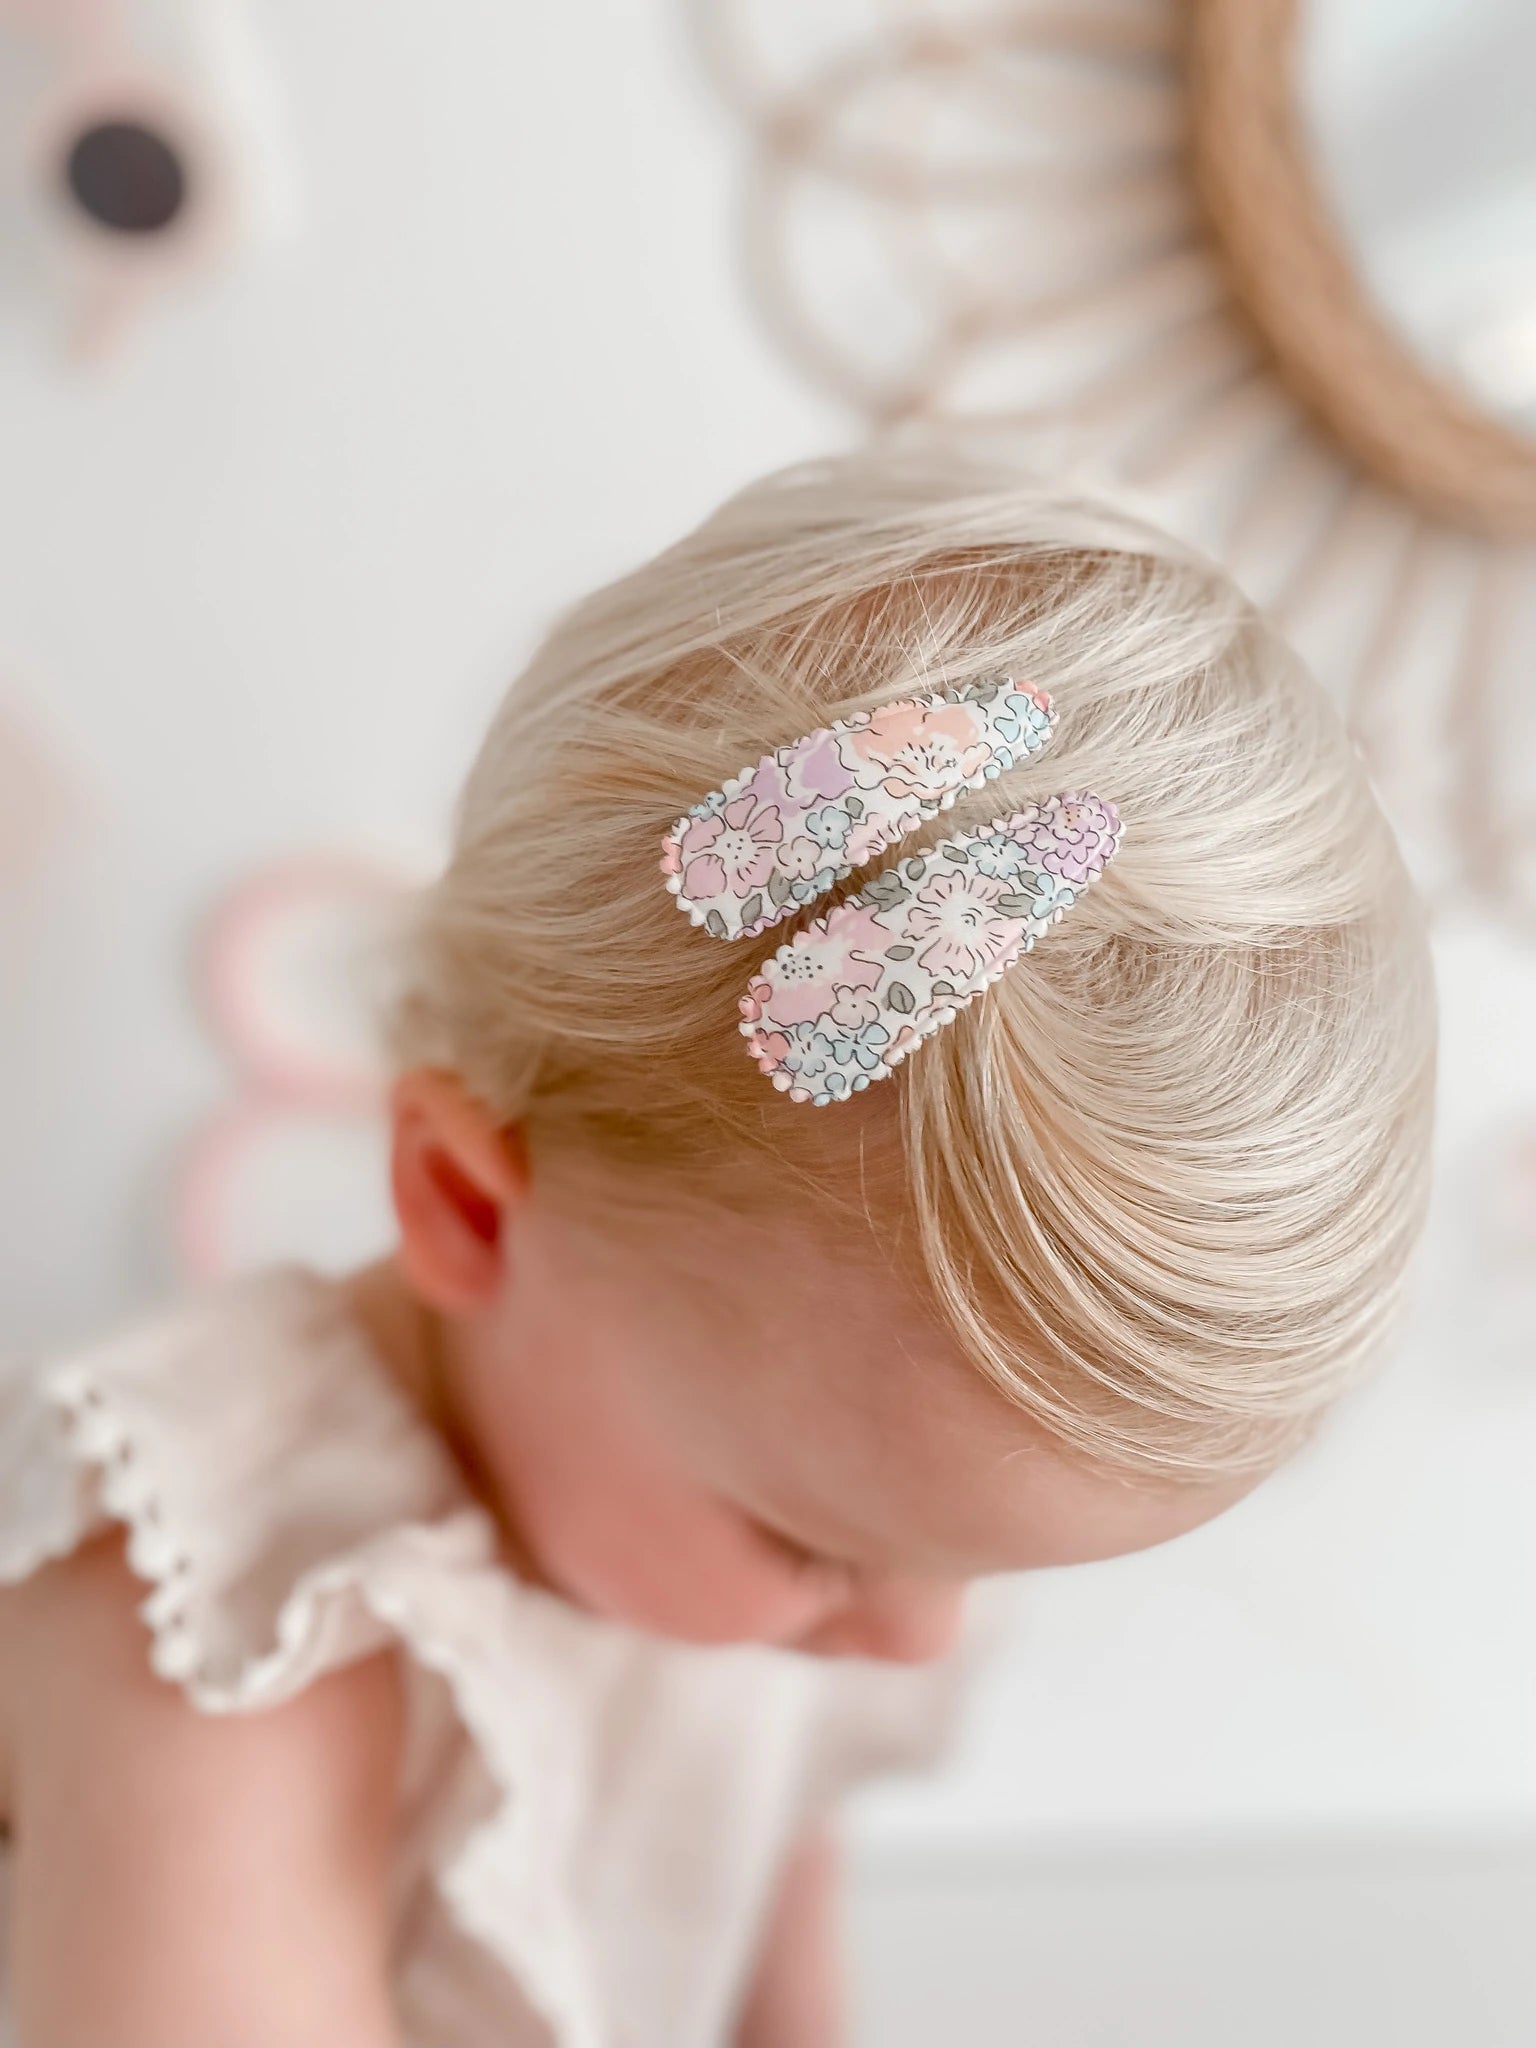 kids pretty floral hair clips in baby hair